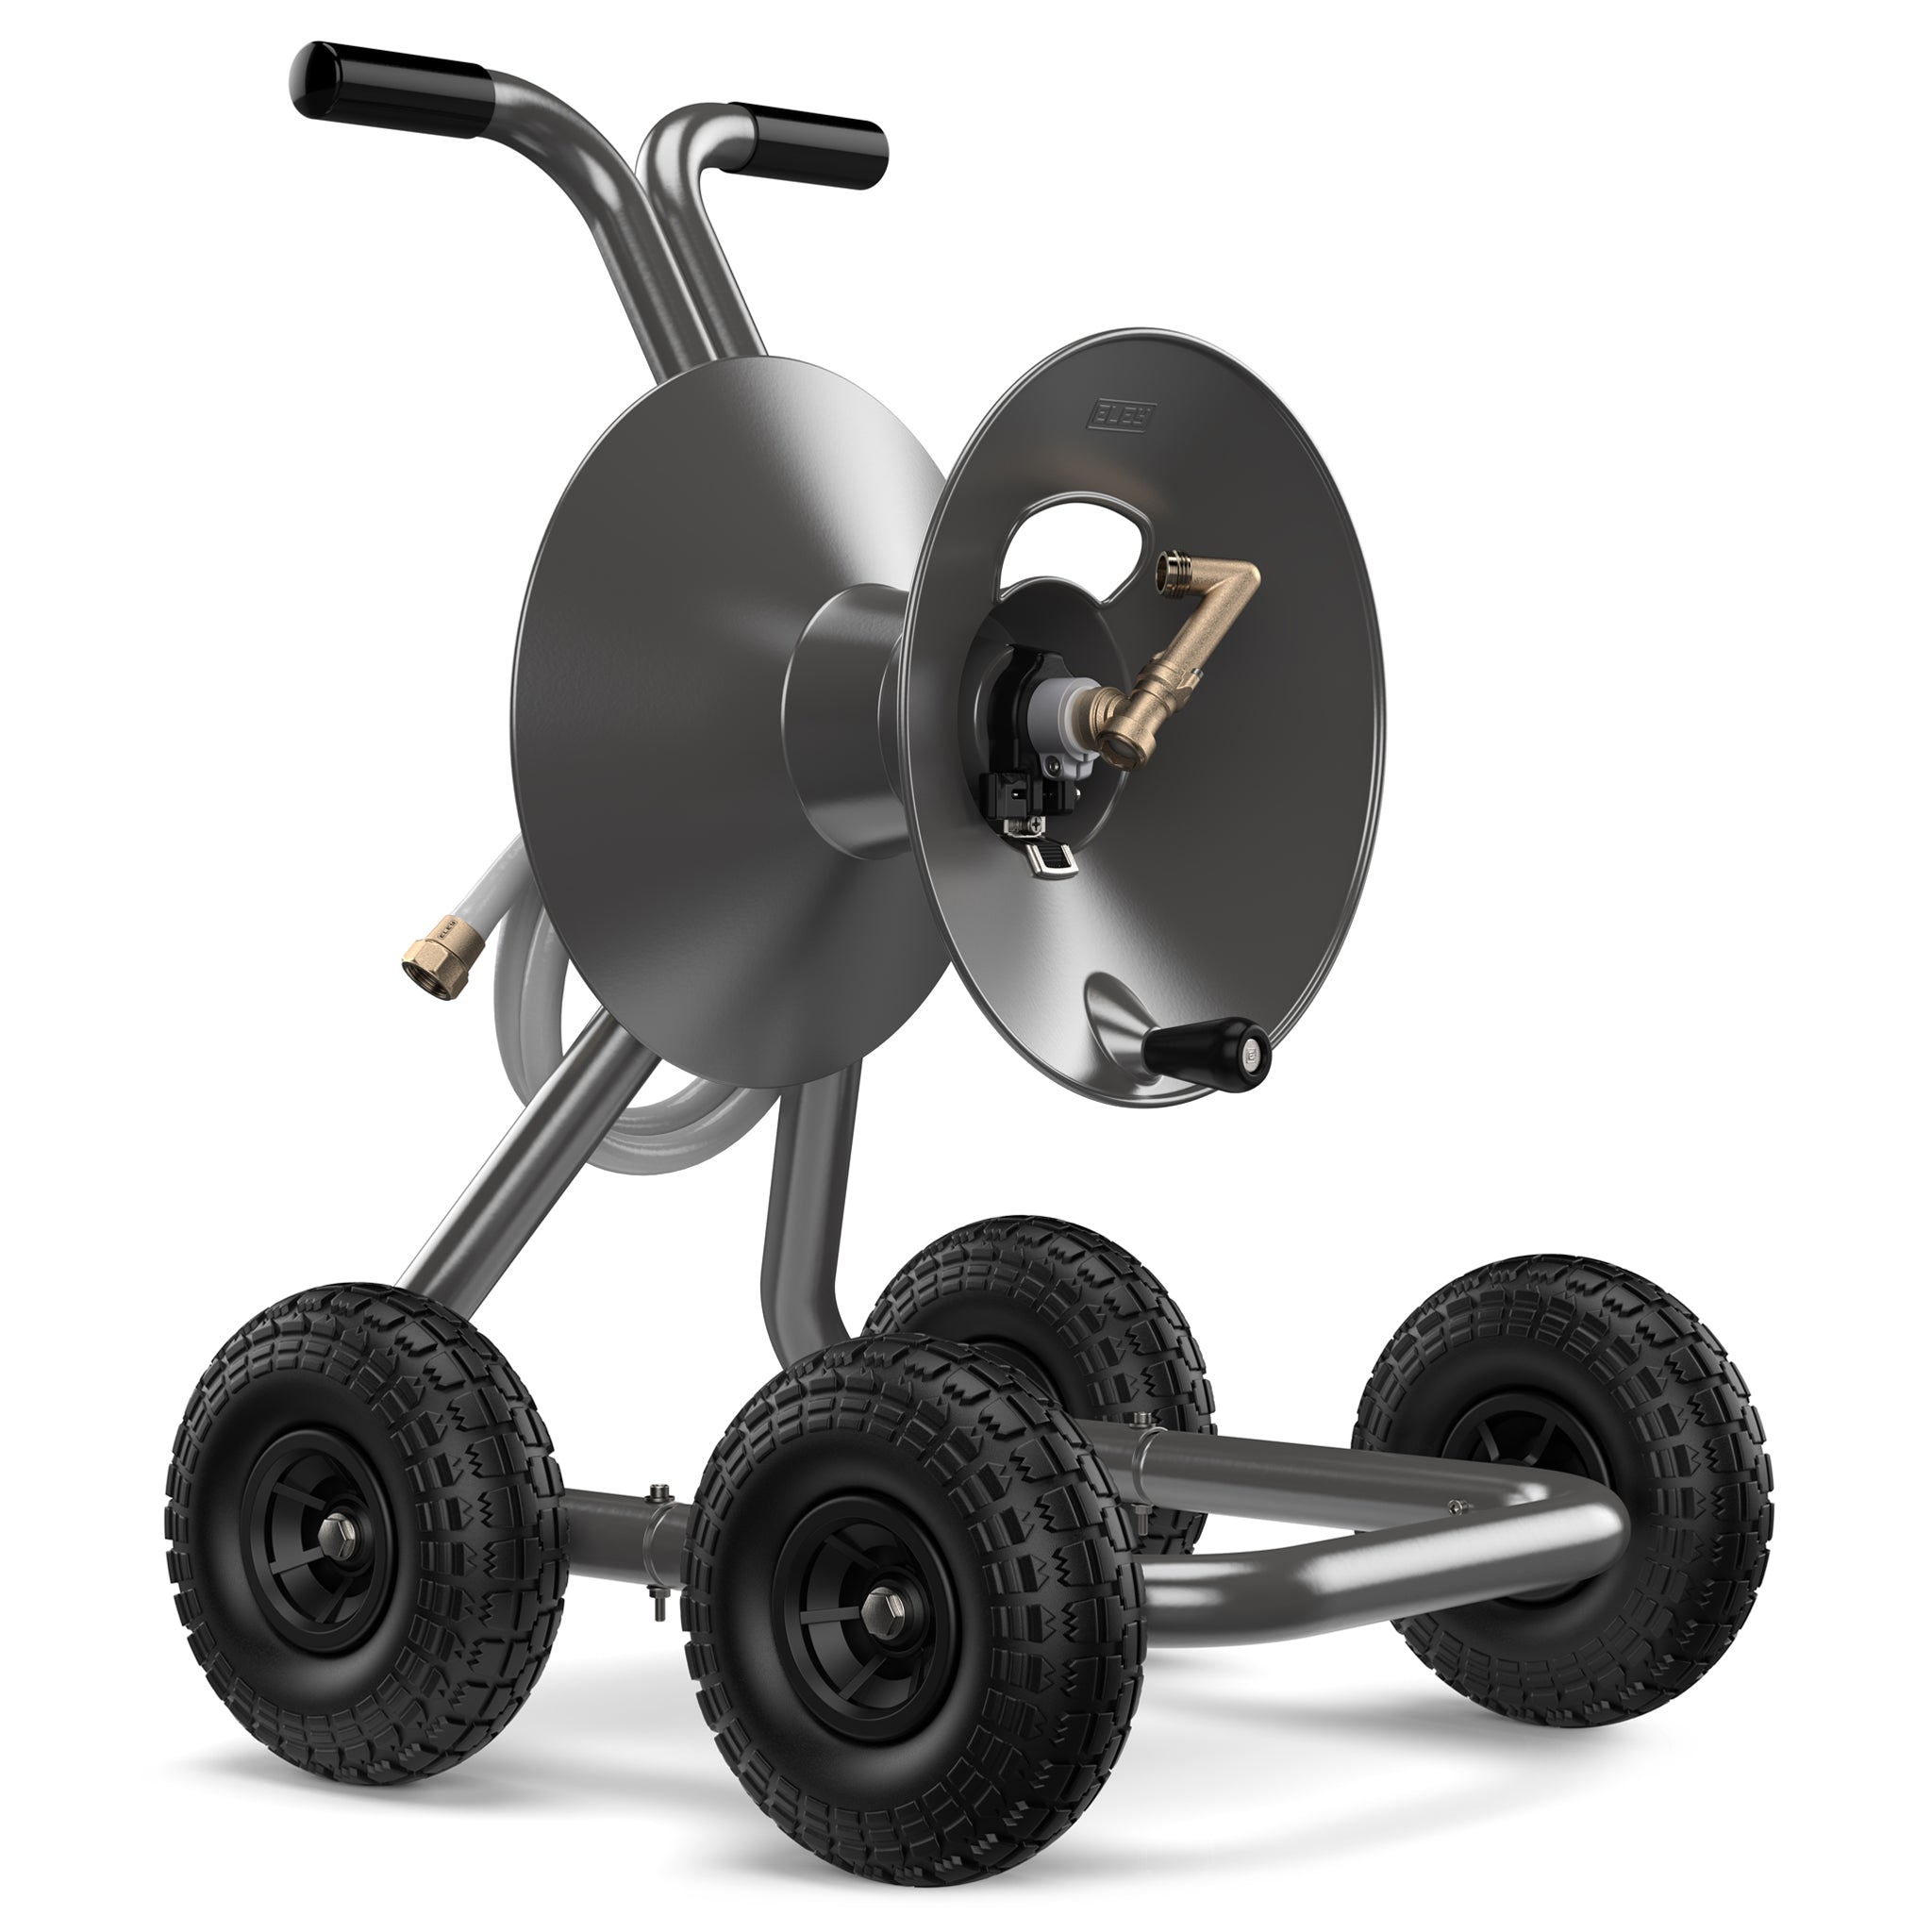 Portable Auto Rewind Garden Hose Reel / Industrial Garden Hose Reel Cart